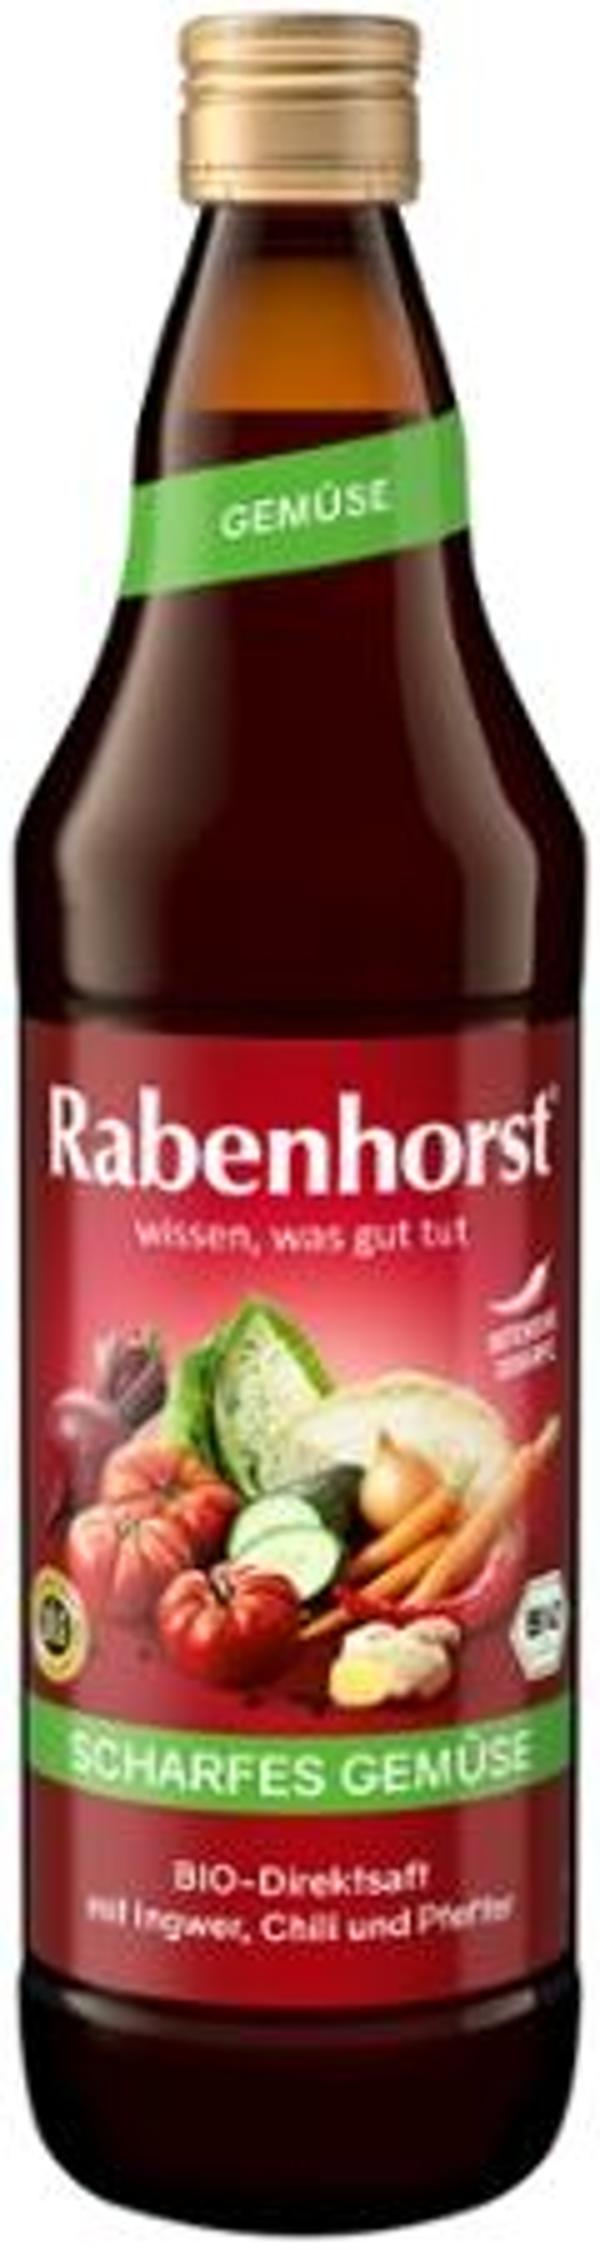 Produktfoto zu Rabenhorst - Scharfes Gemüse Saft